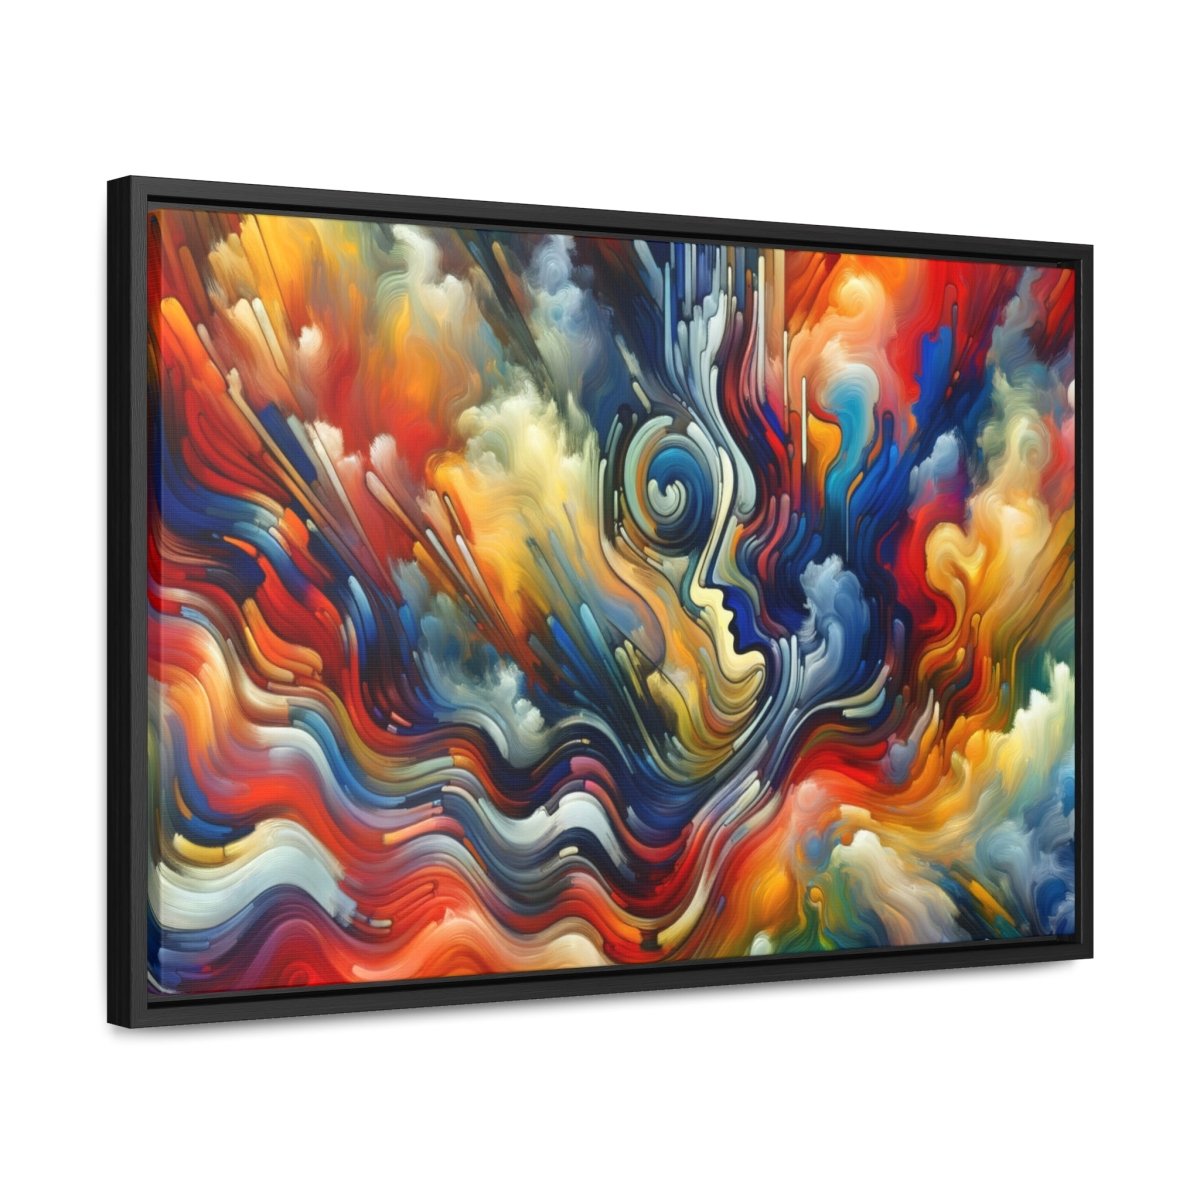 Contemplative Color Vortex Canvas - Framed Abstract Wall Art - Neodigitalis Artimata